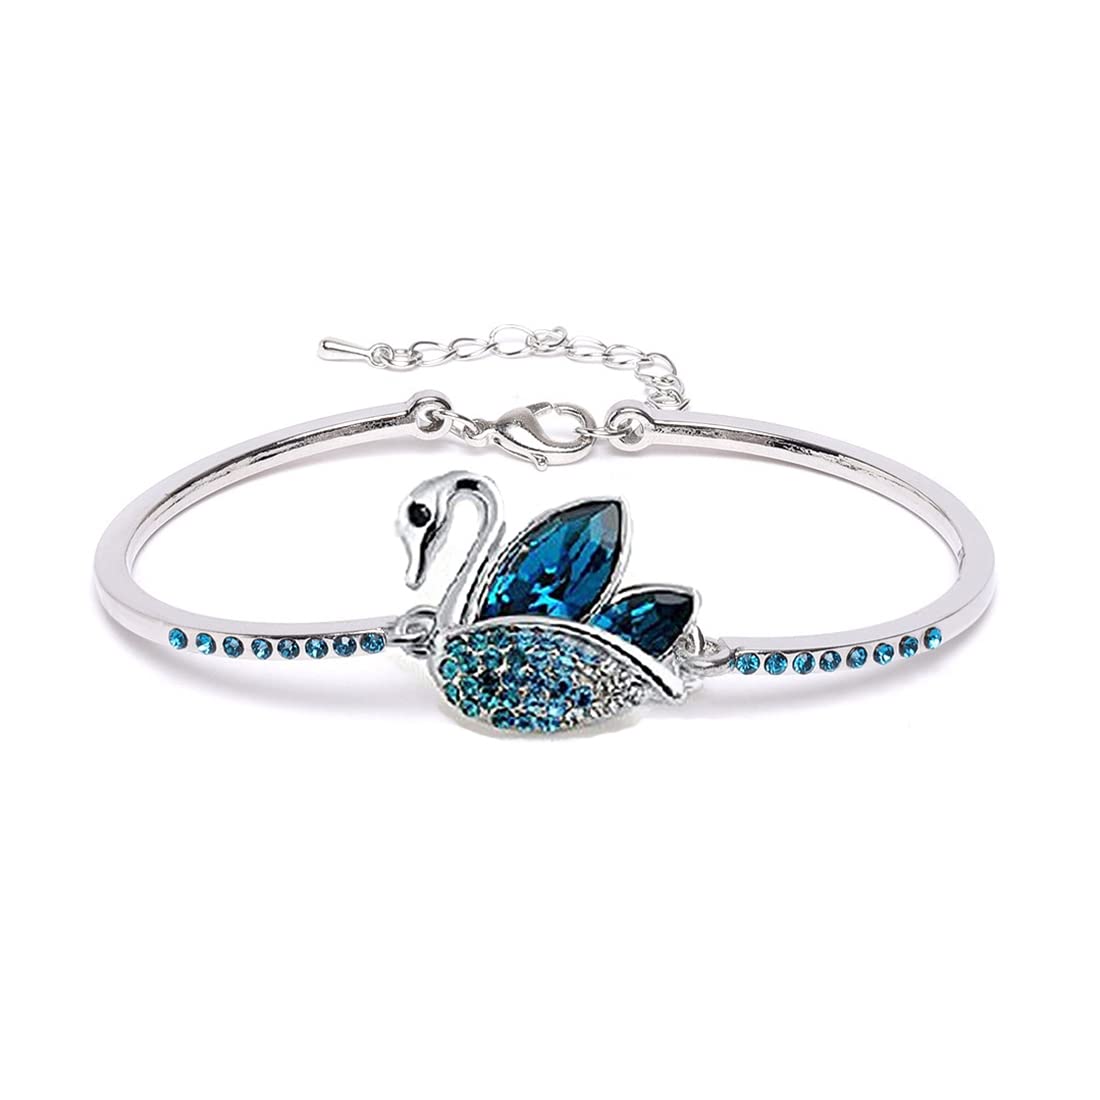 Kairangi Bracelet for Women and Girls Blue Crystal Swan Shaped Silver Toned Crystal Bracelet for Girls | Birthday Gift for Girls and Women Anniversary Gift for Wife